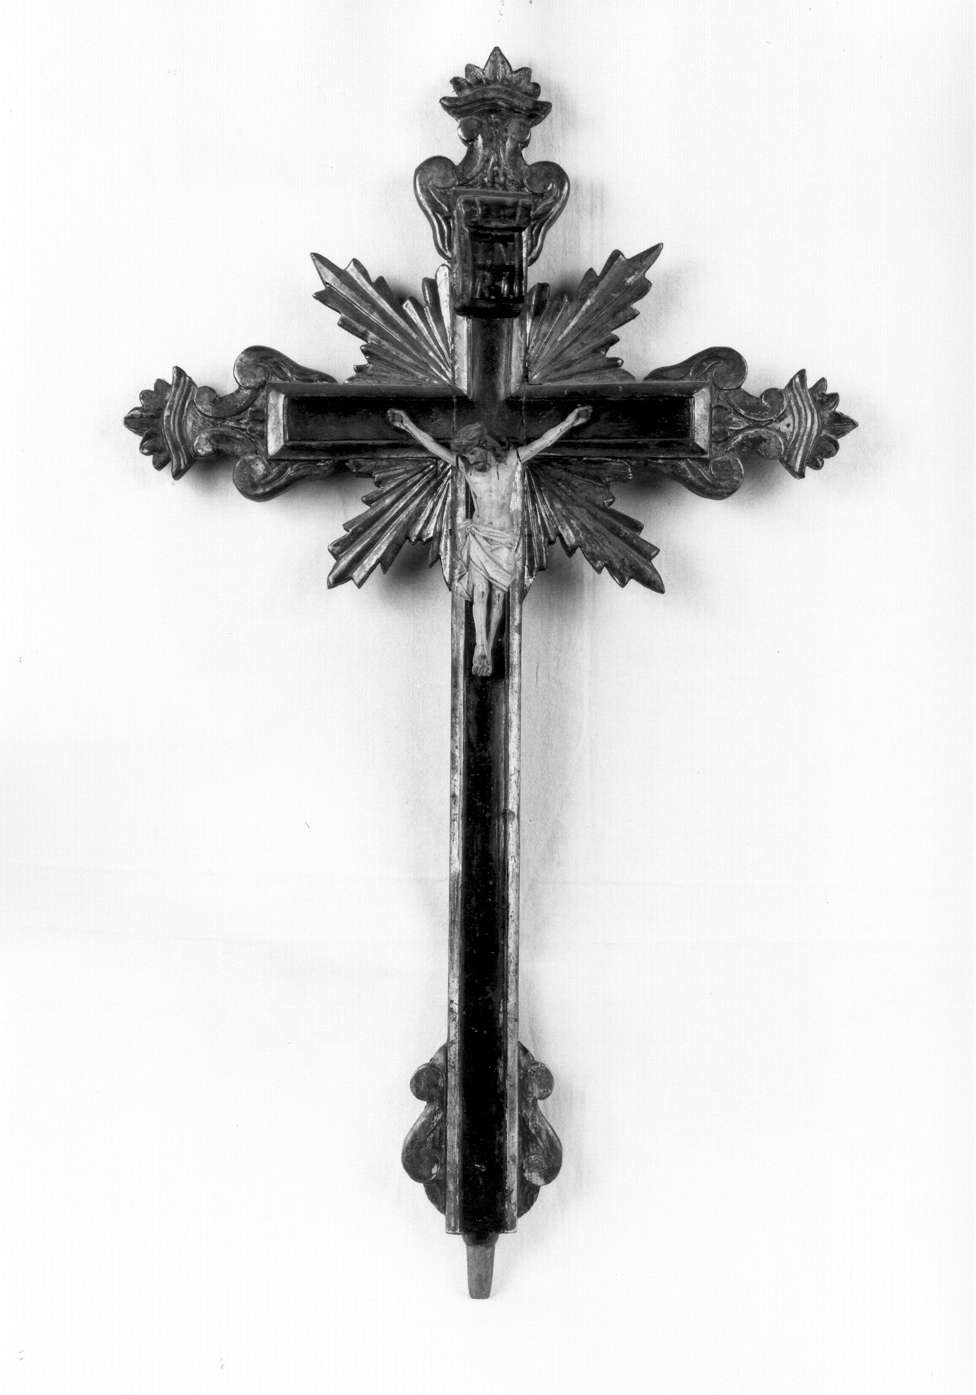 croce d'altare - manifattura emiliana (prima metà sec. XVIII)